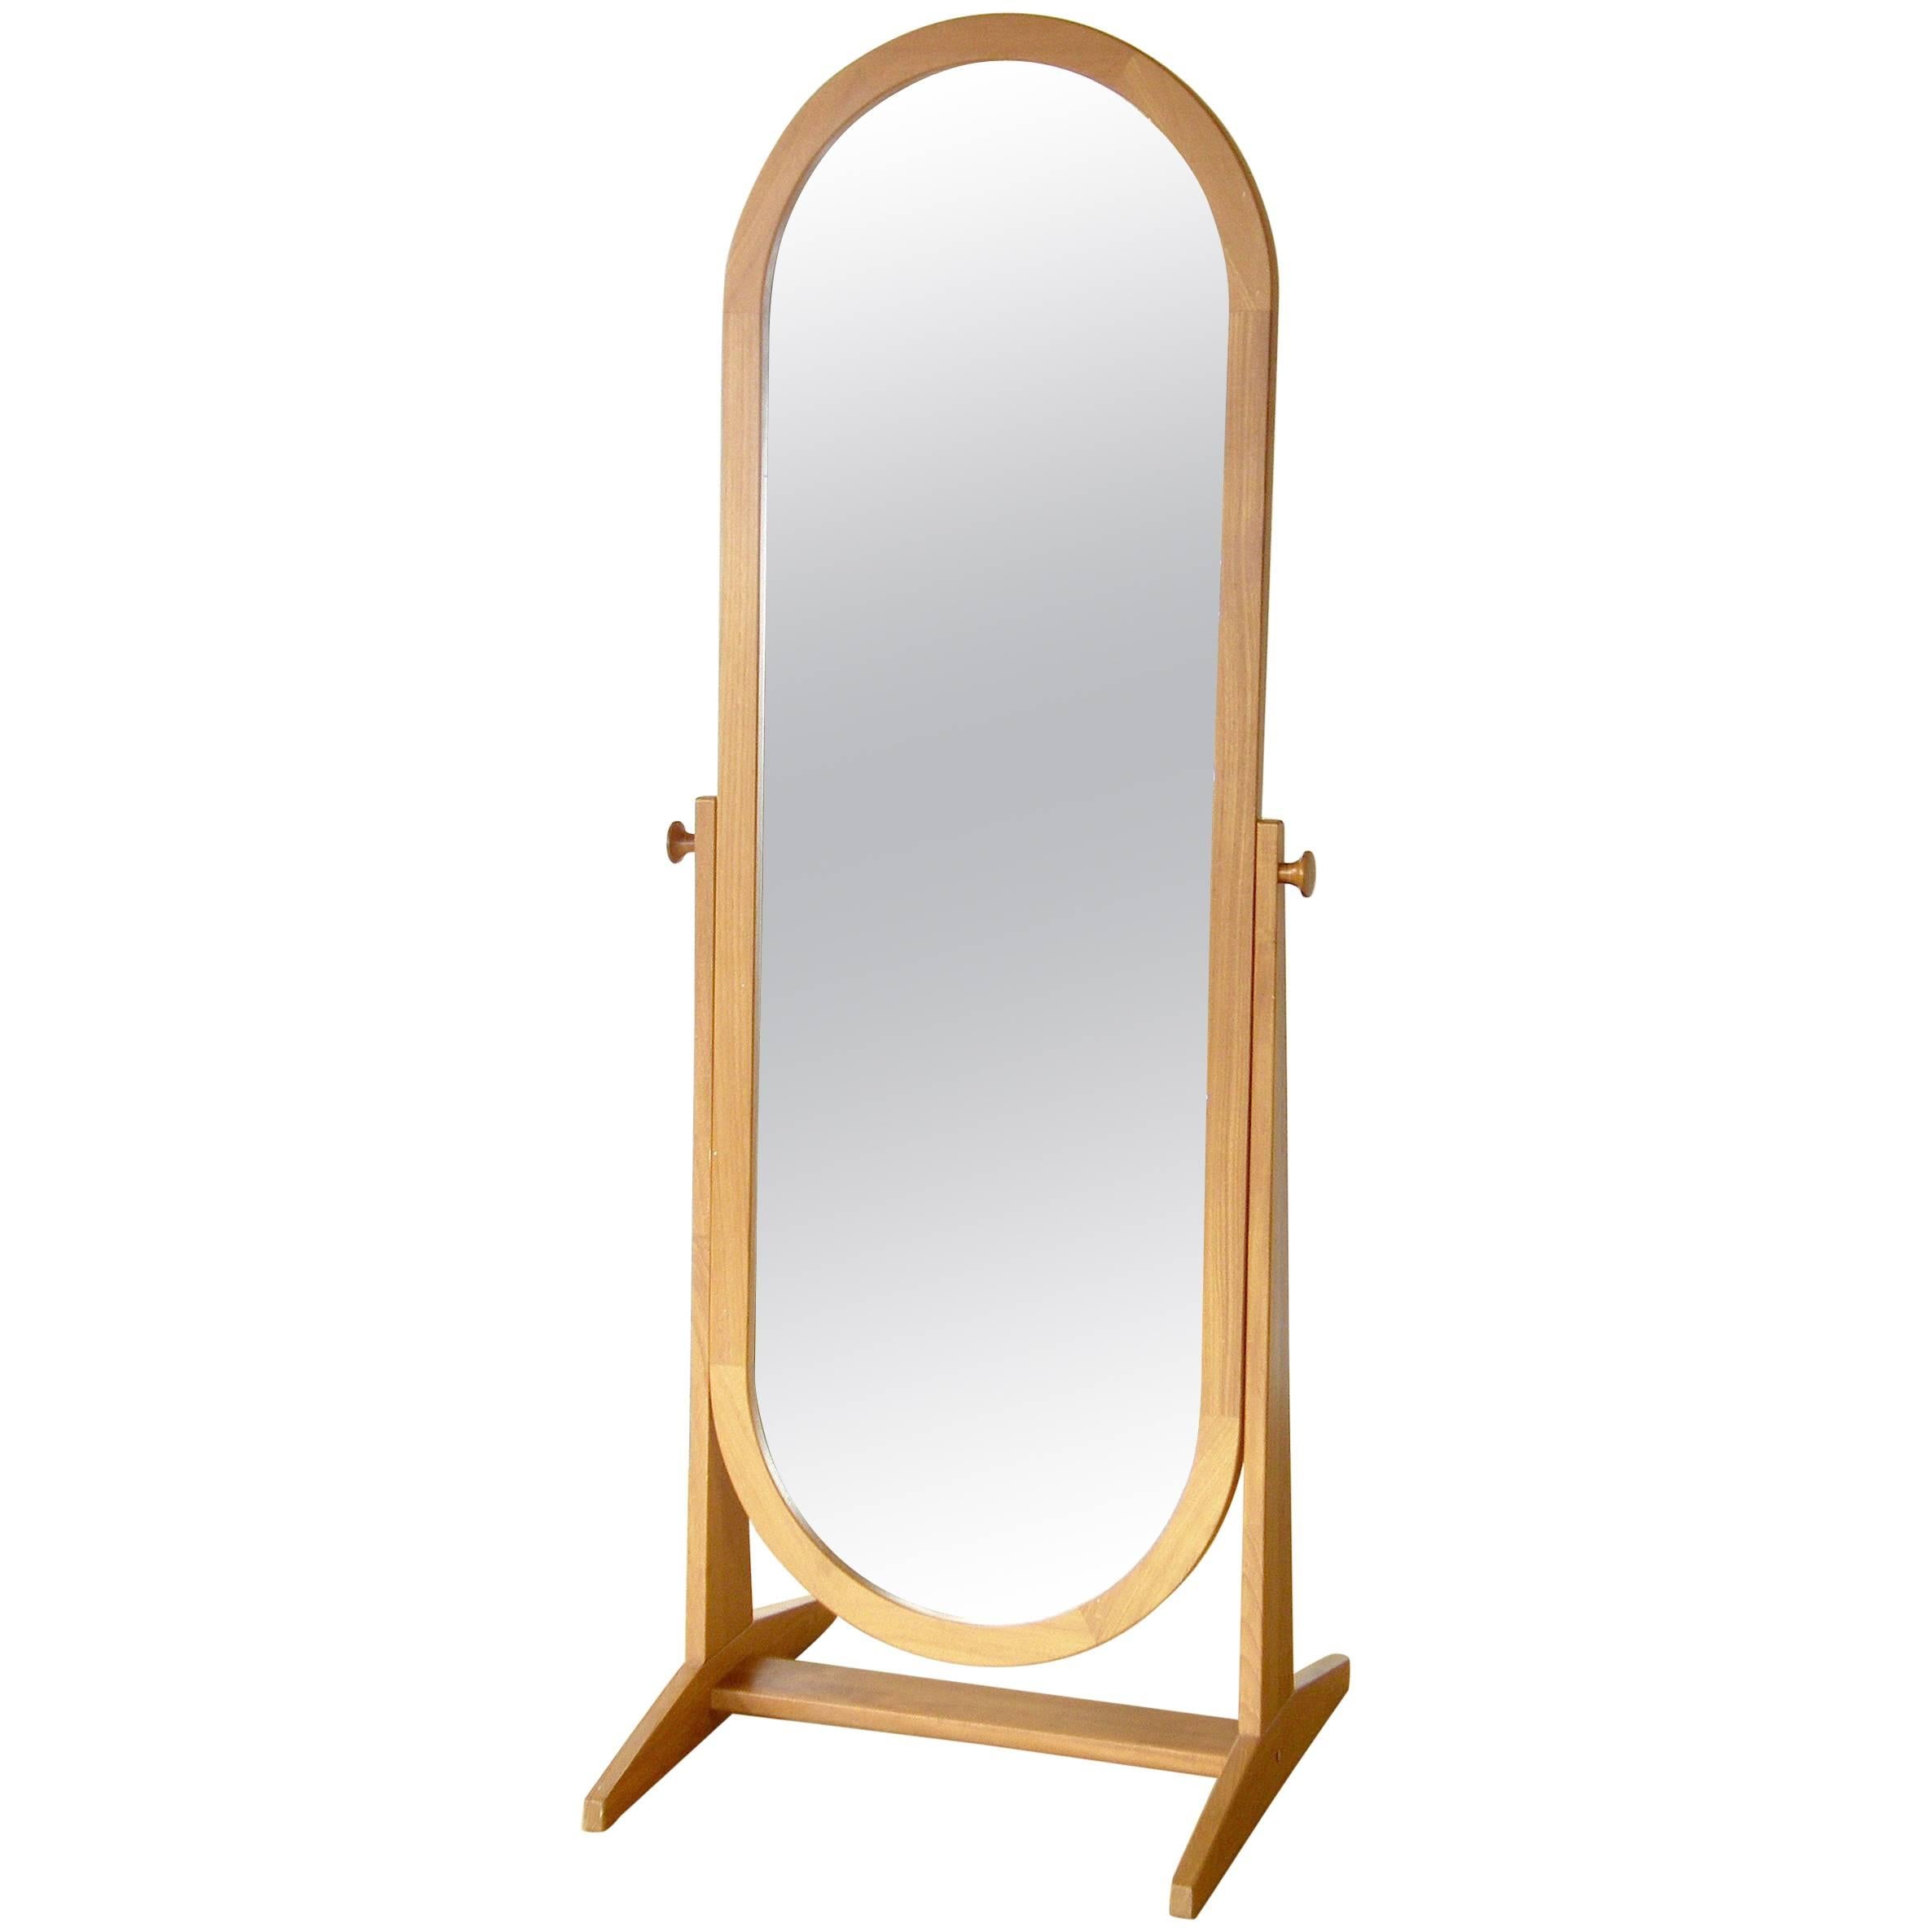 Pedersen & Hansen Teak Cheval Floor Mirror with Adjustable Position